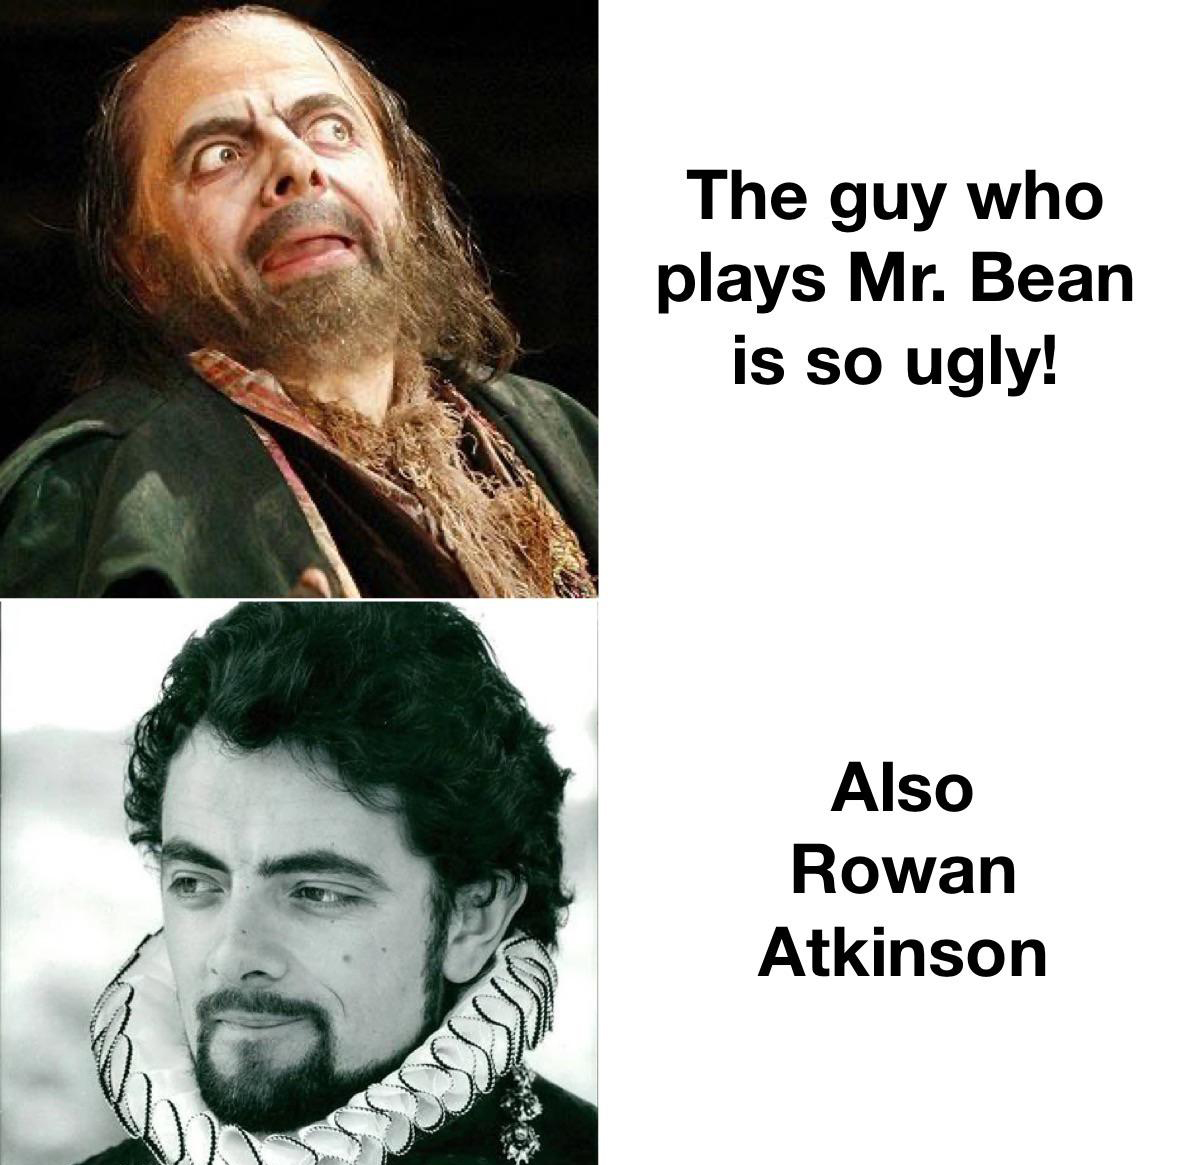 dank memes - mr bean san andreas meme - The guy who plays Mr. Bean is so ugly! Also Rowan Atkinson